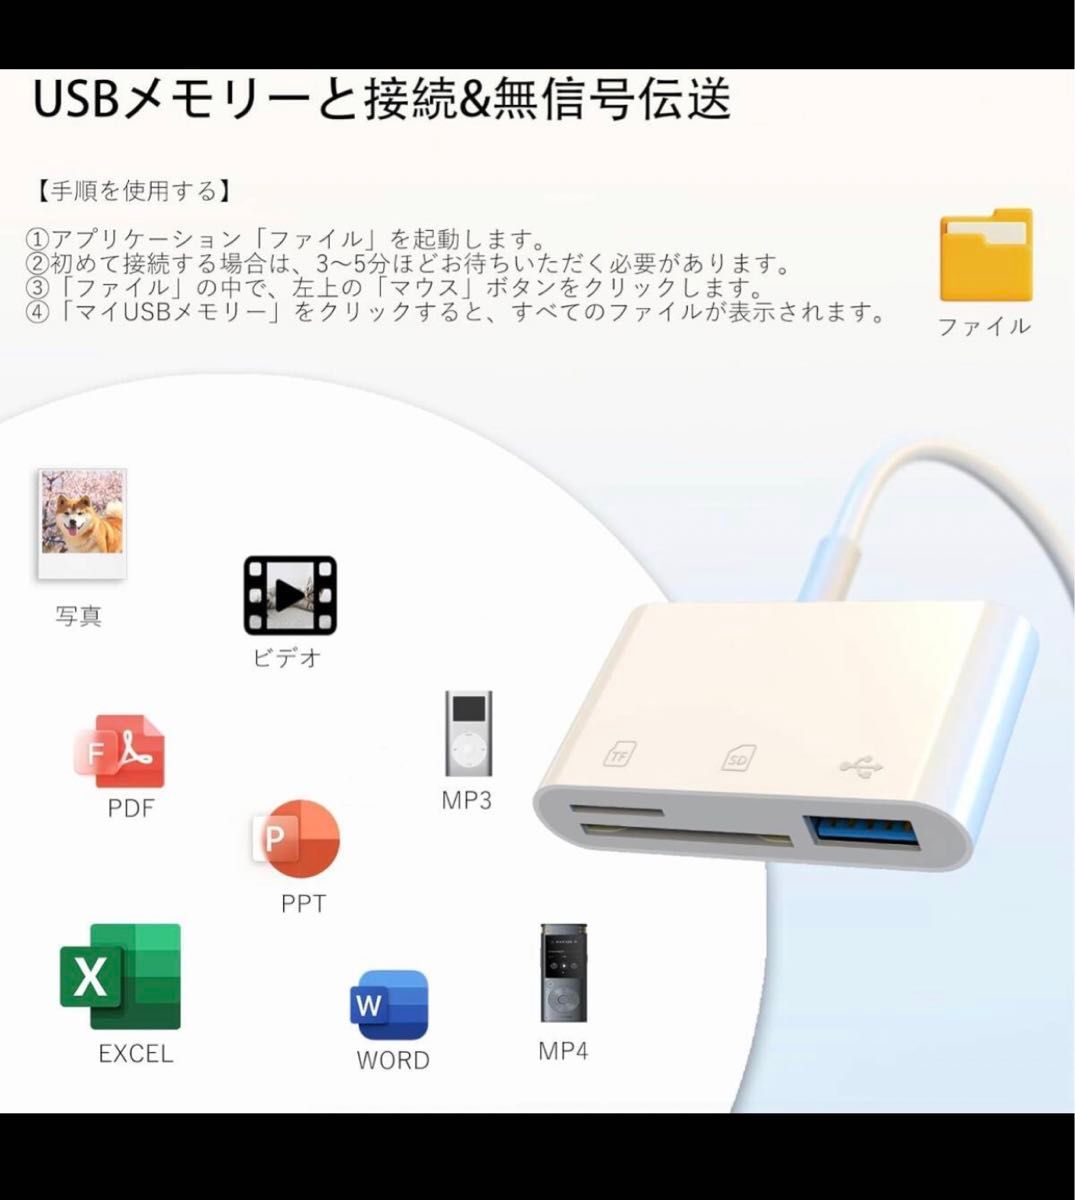 iPhone SDカードリーダー 3in1 USB/SD/TF変換アダプタ 設定不要 写真/ビデオ USB3.0 高速 双方向転送